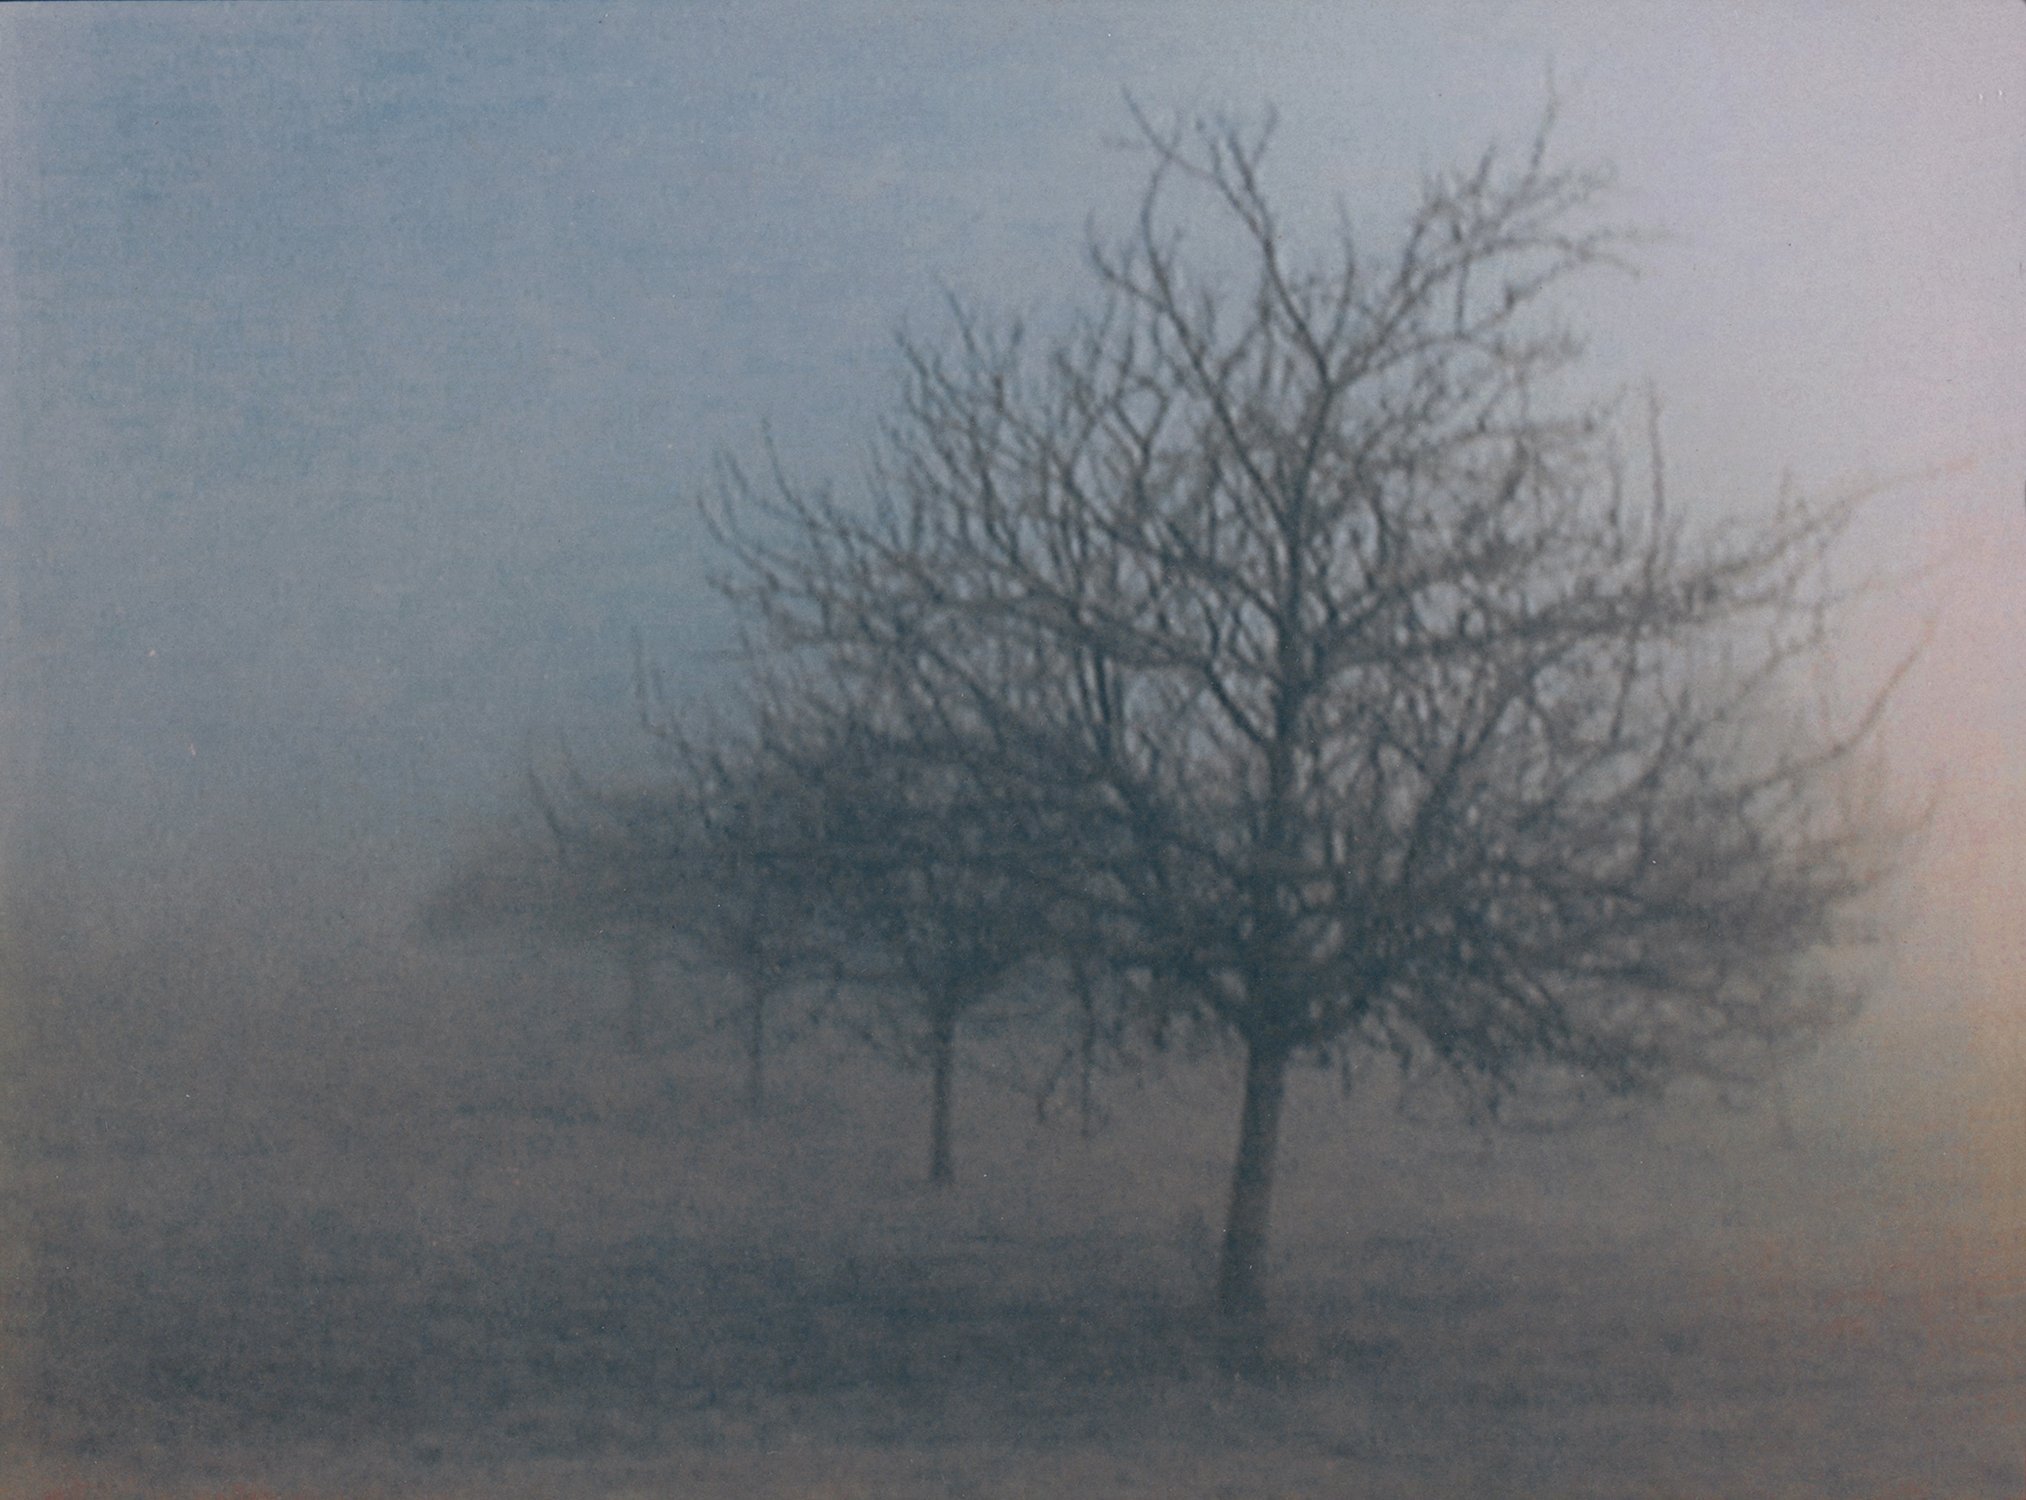 "Misty Morning" Apple QuickTake 200 (0.3 megapixels), Tricolor Cyanotype